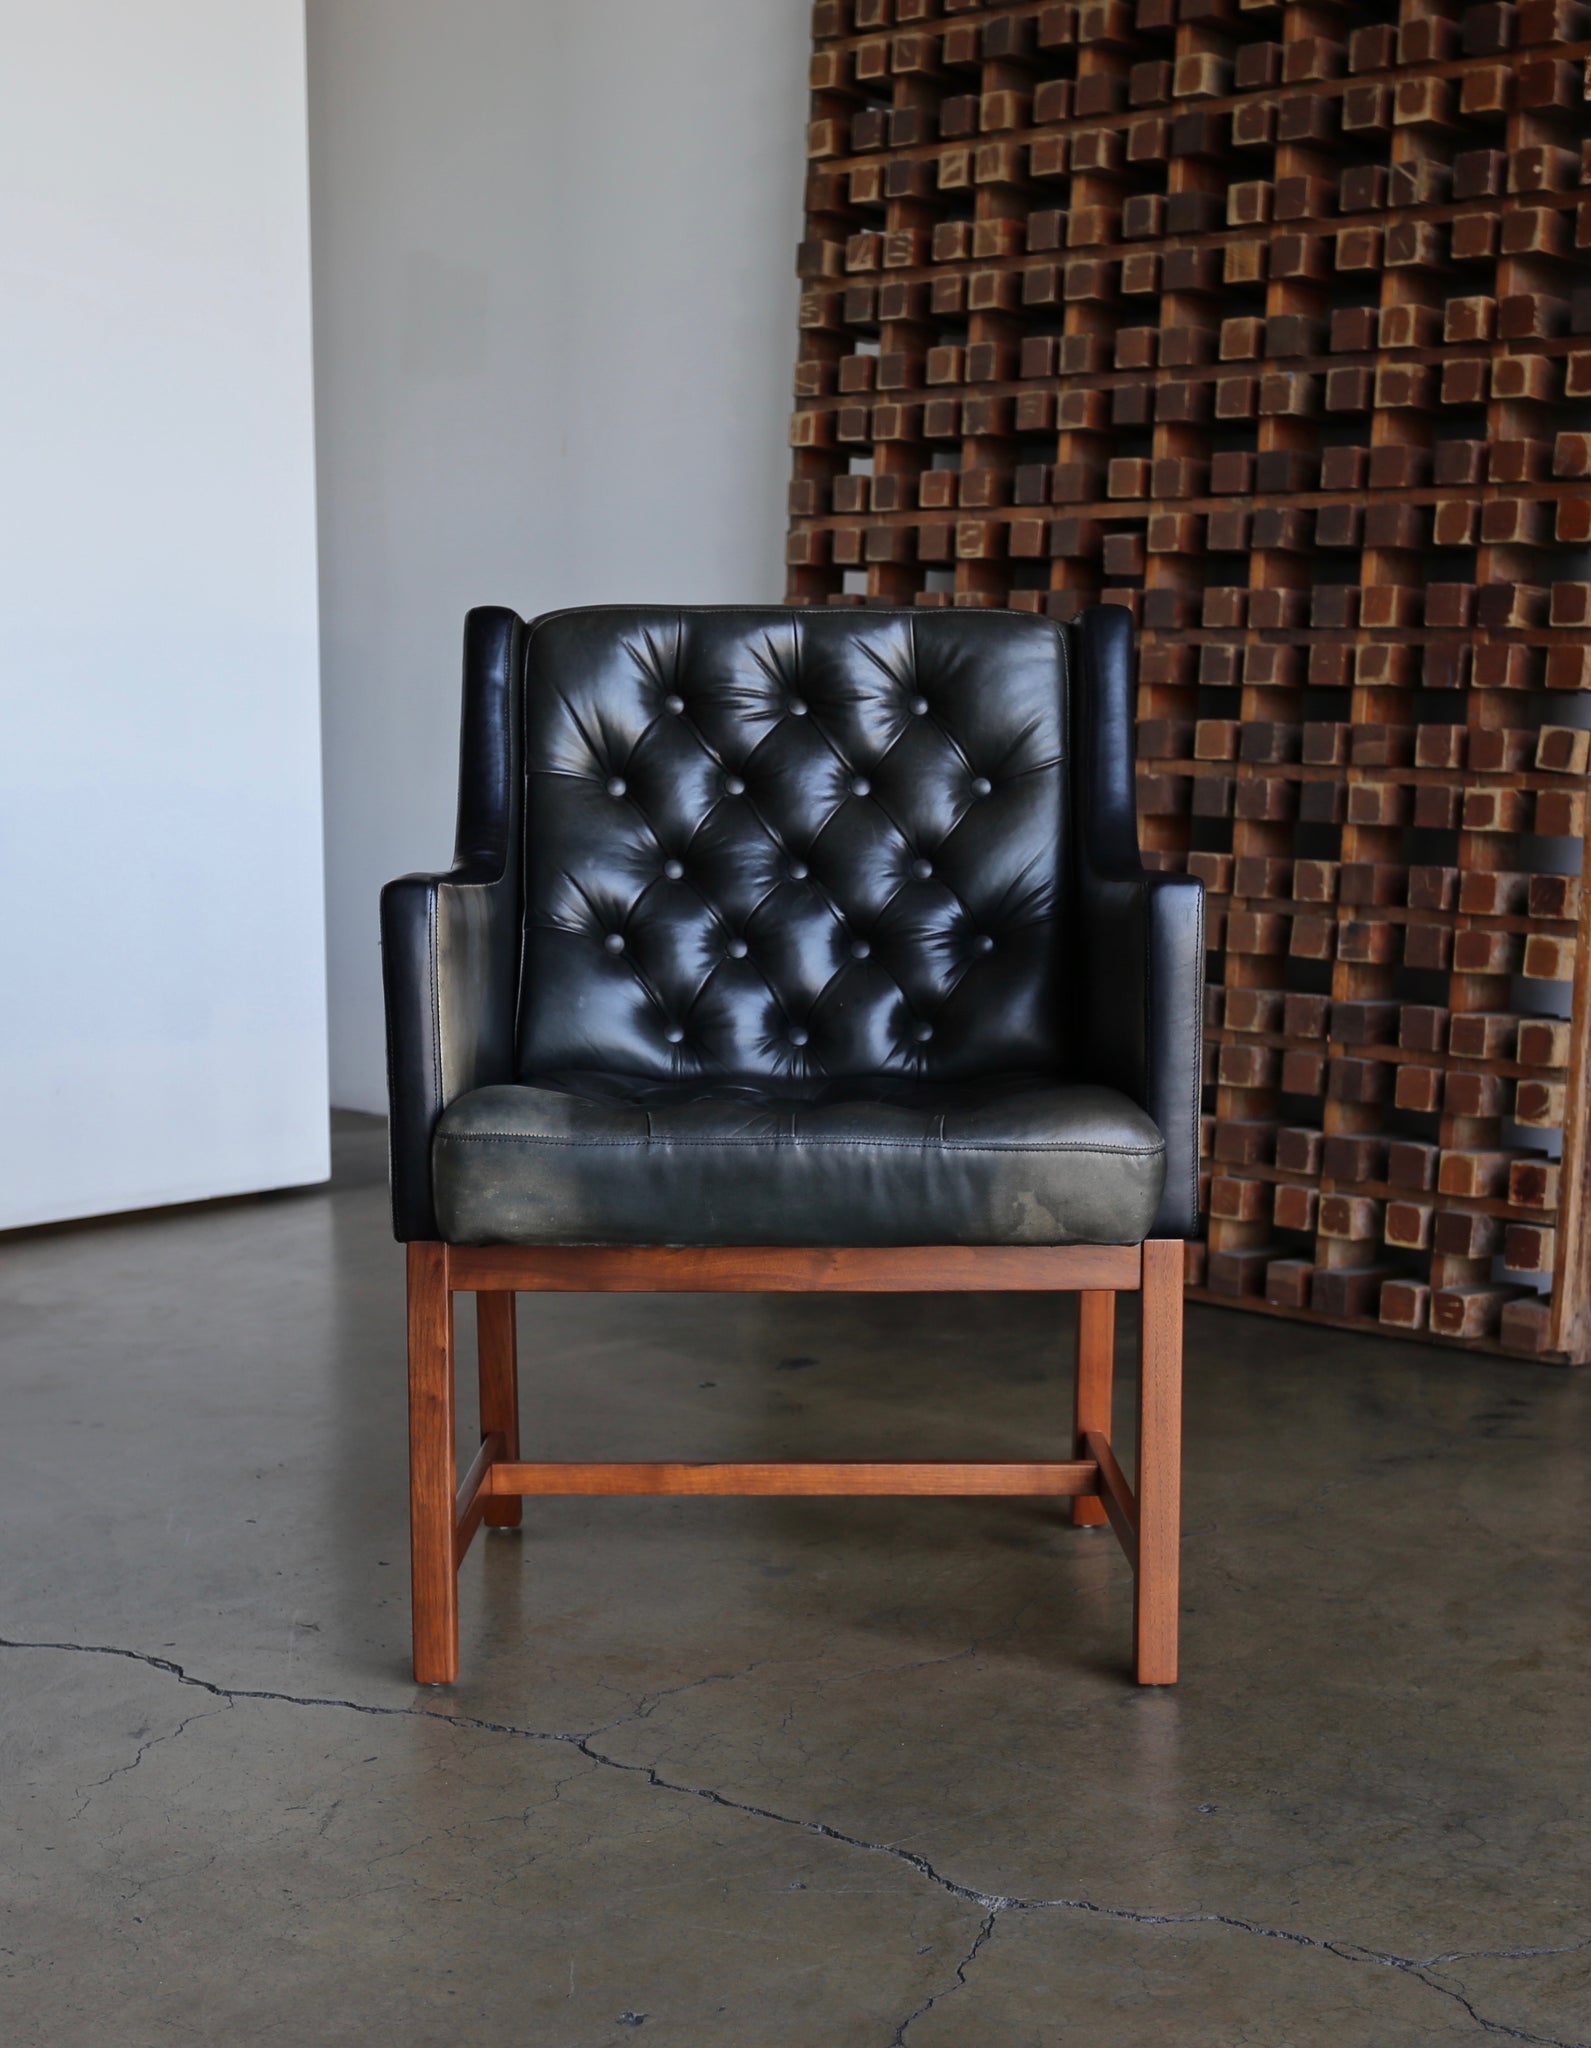 = SOLD = Karl Erik Ekselius Tufted Leather Chairs for JOC, circa 1960